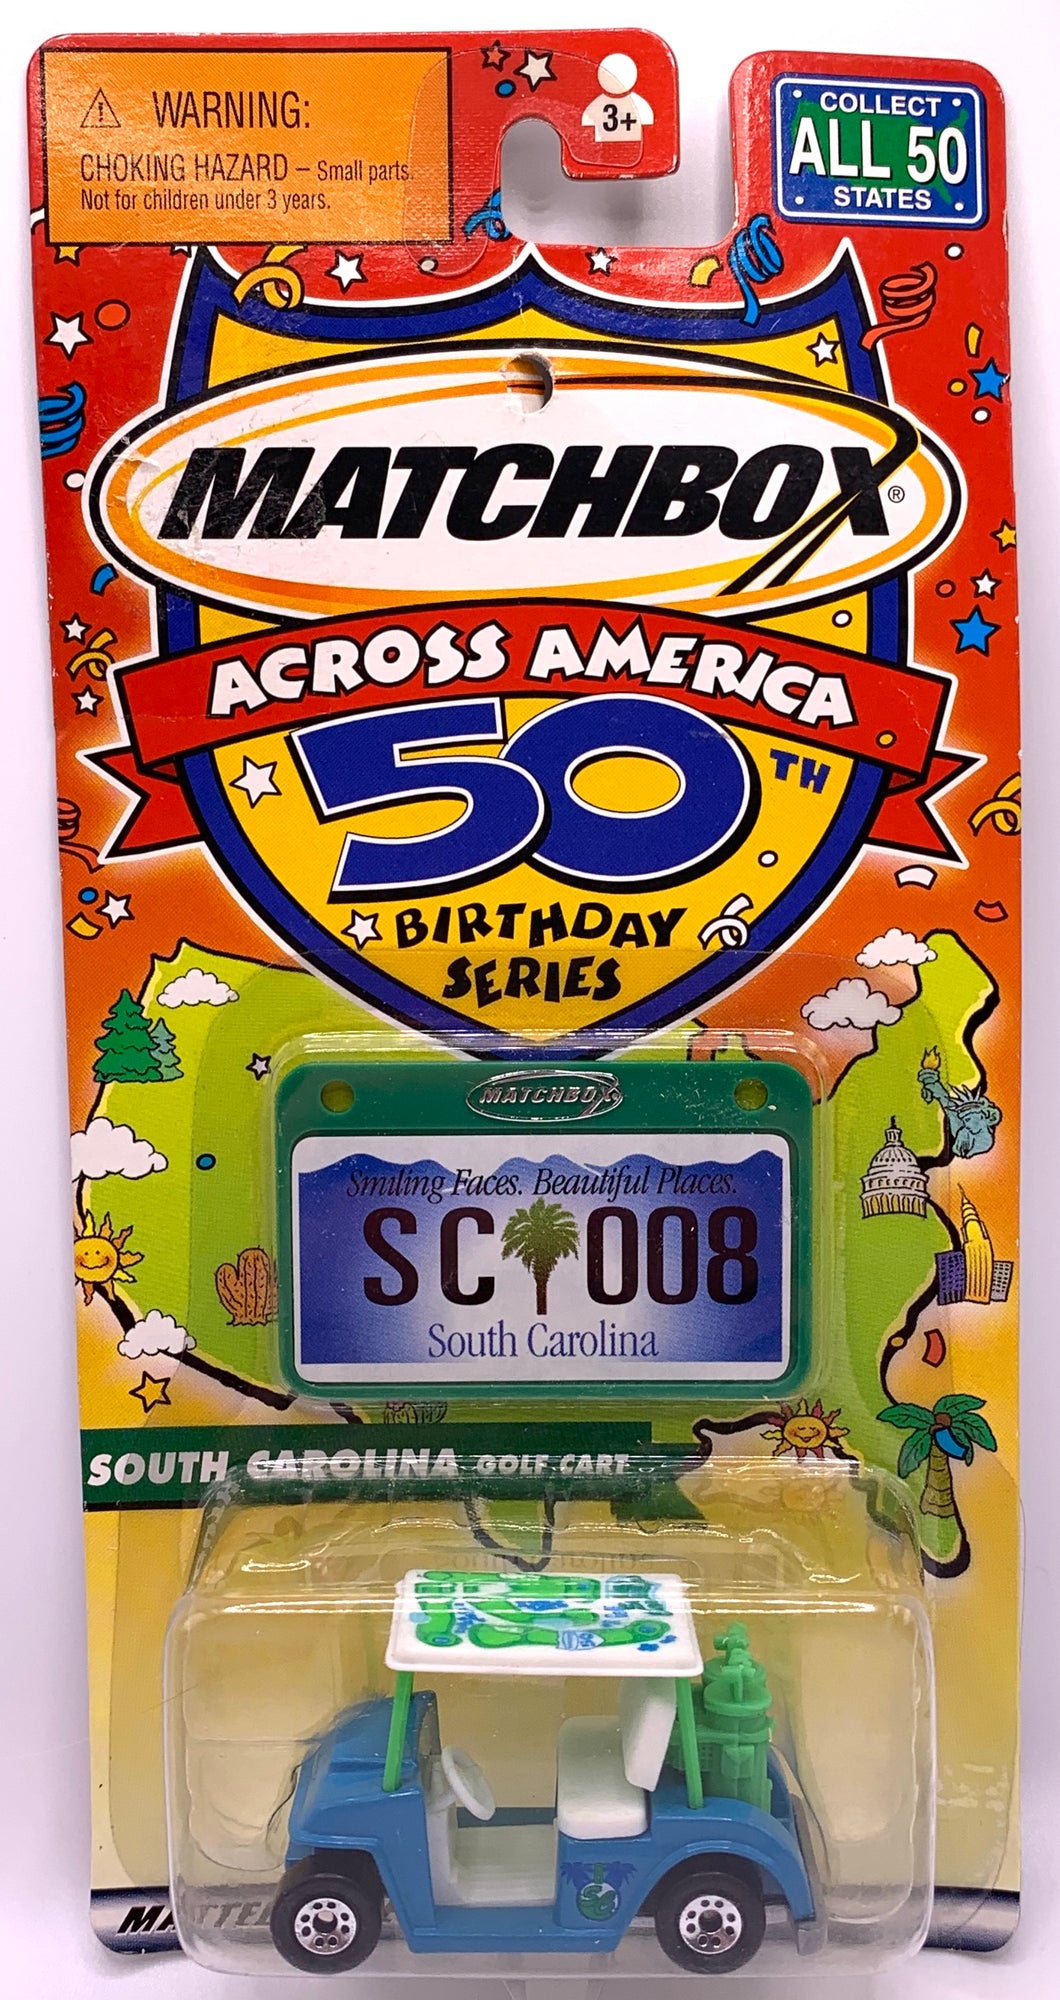 SOUTH CAROLINA Golf Cart 1/56 Matchbox Across America 50th Birthday Series